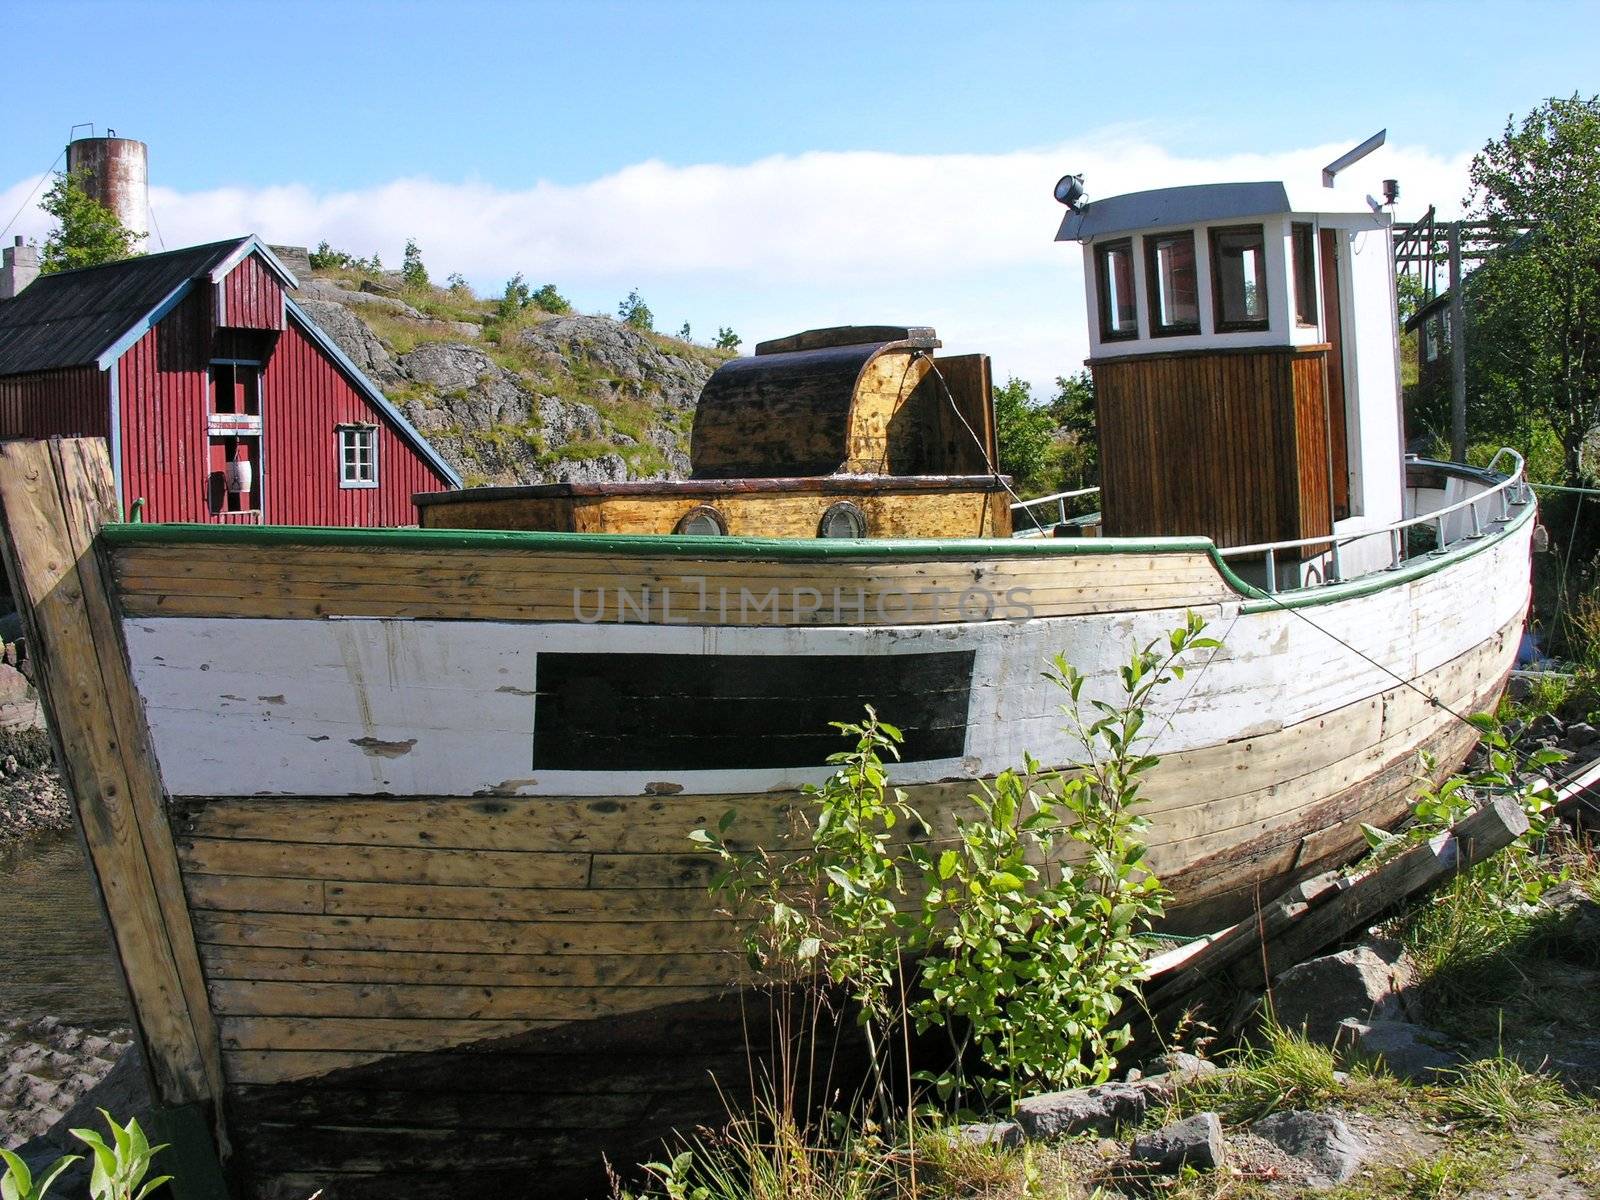 Old Sinked fishing boat in Lofoten, Norway